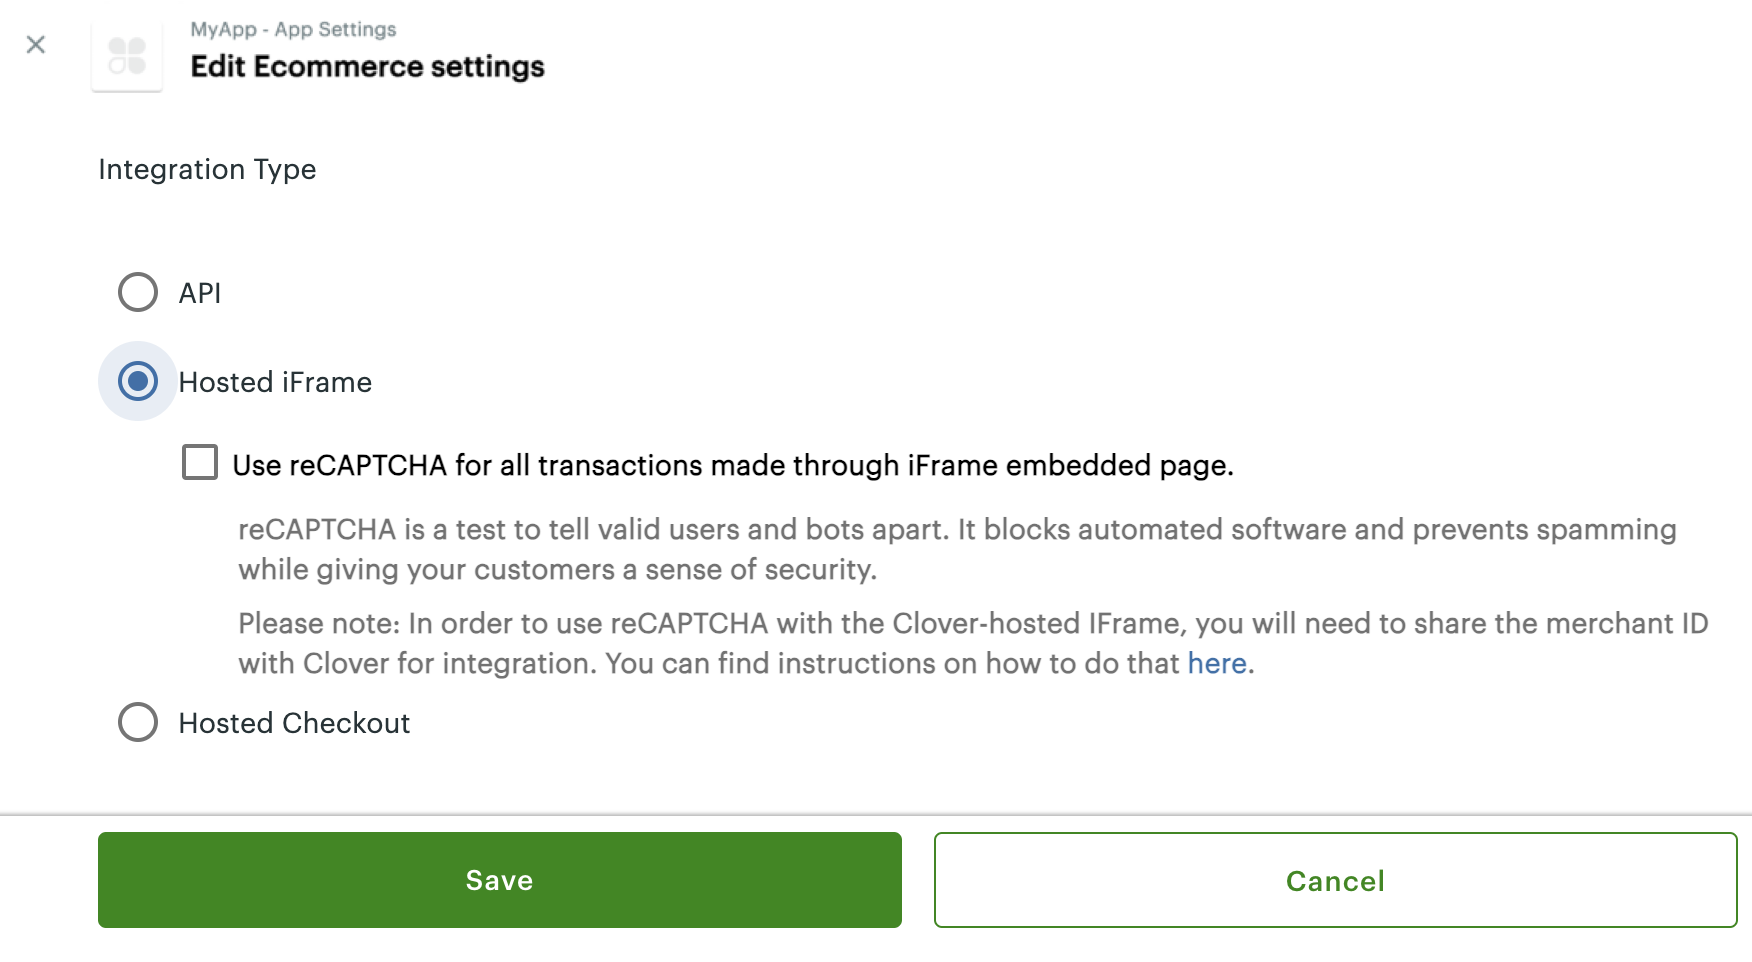 Edit Ecommerce settings pop-up: Use reCAPTCHA